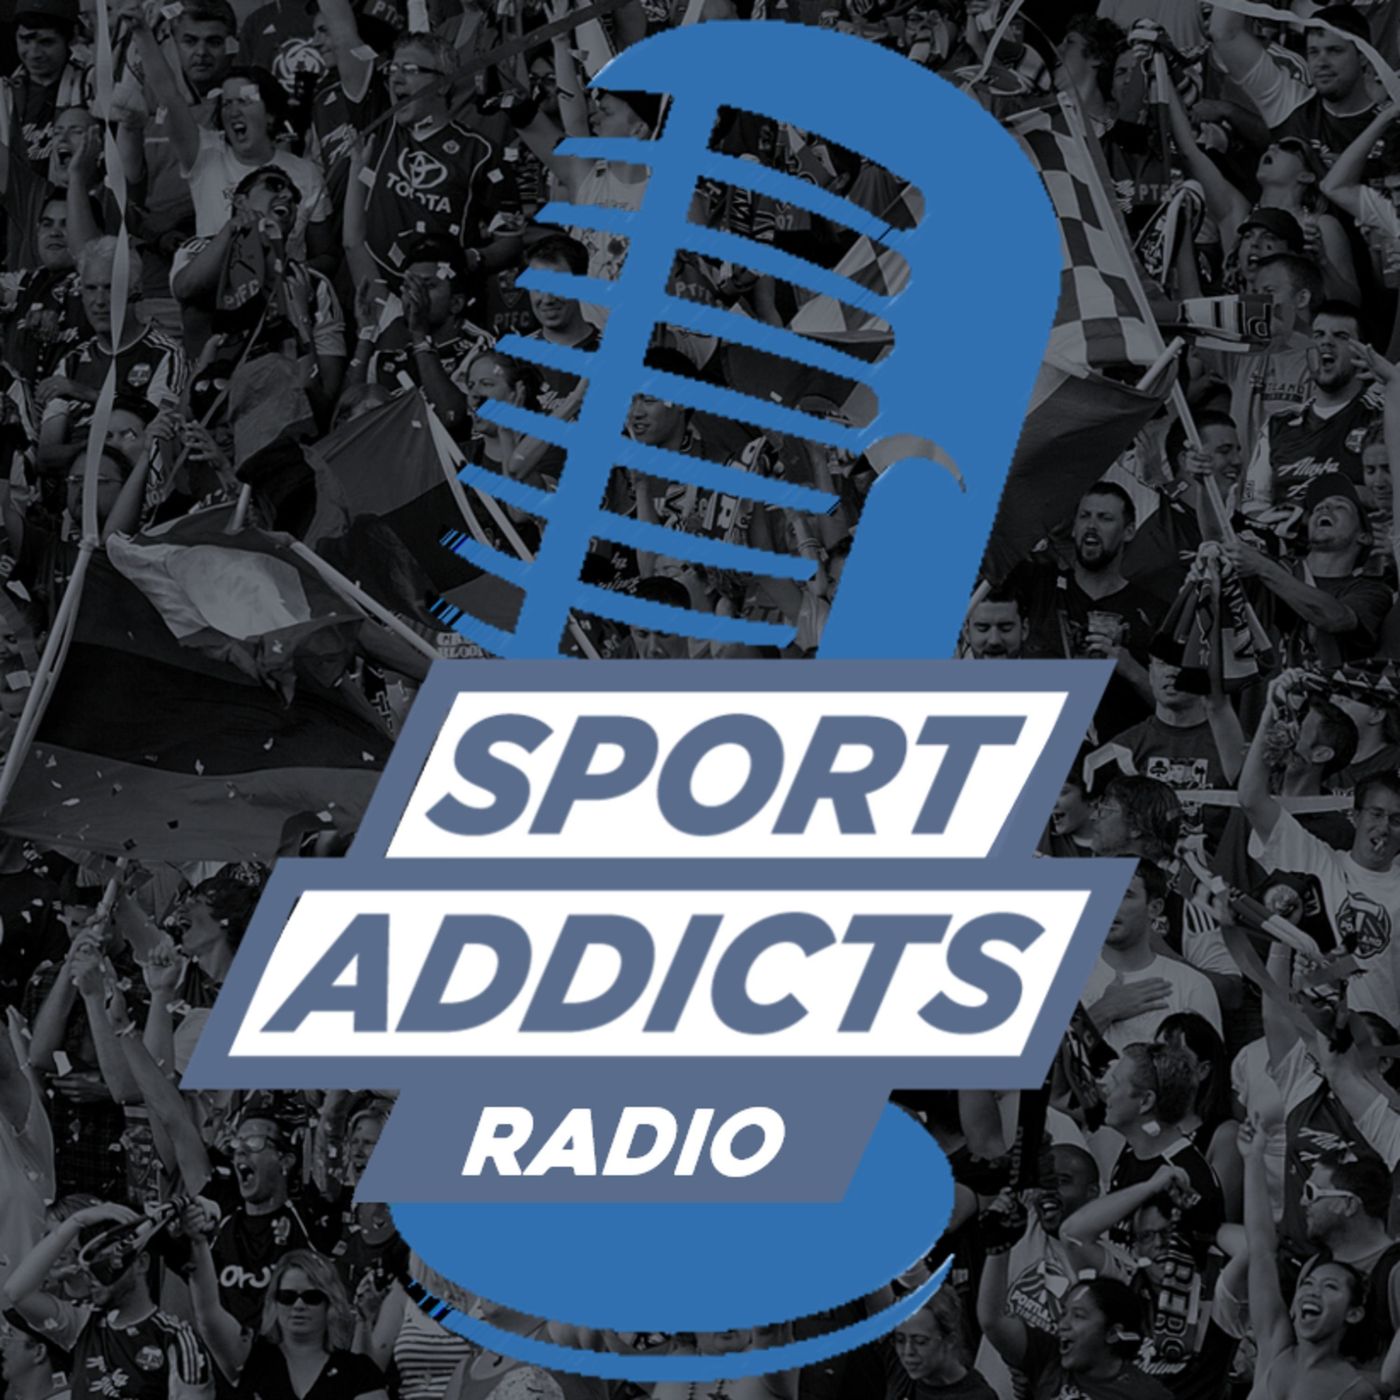 SportAddicts Radio